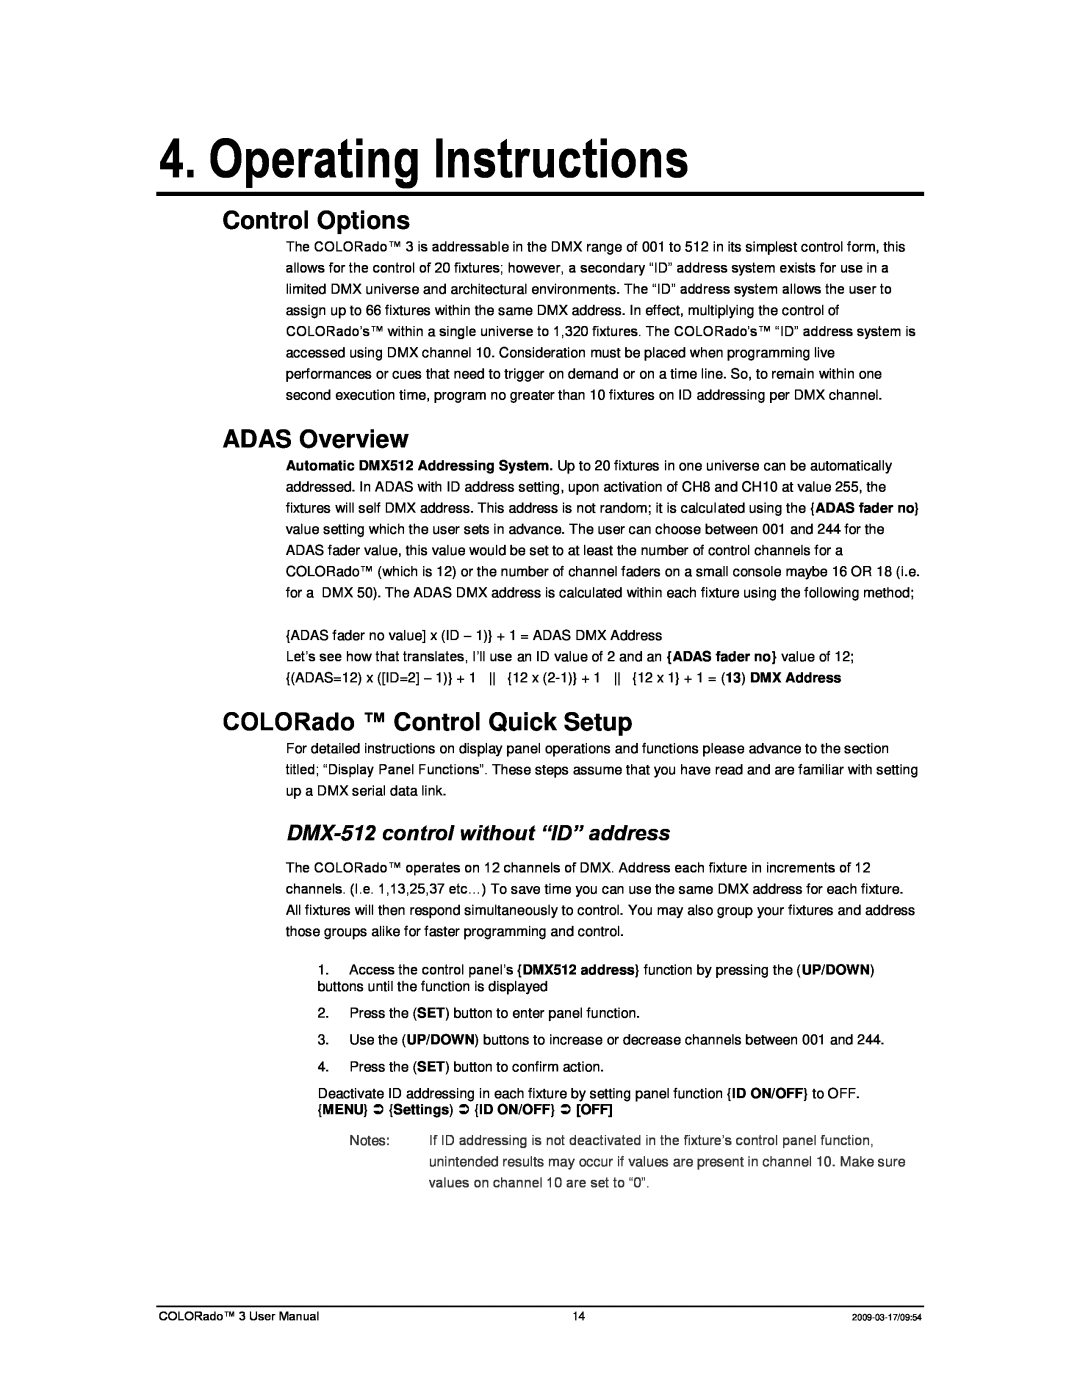 Chauvet 3P user manual Operating Instructions, Control Options, ADAS Overview, COLORado Control Quick Setup 